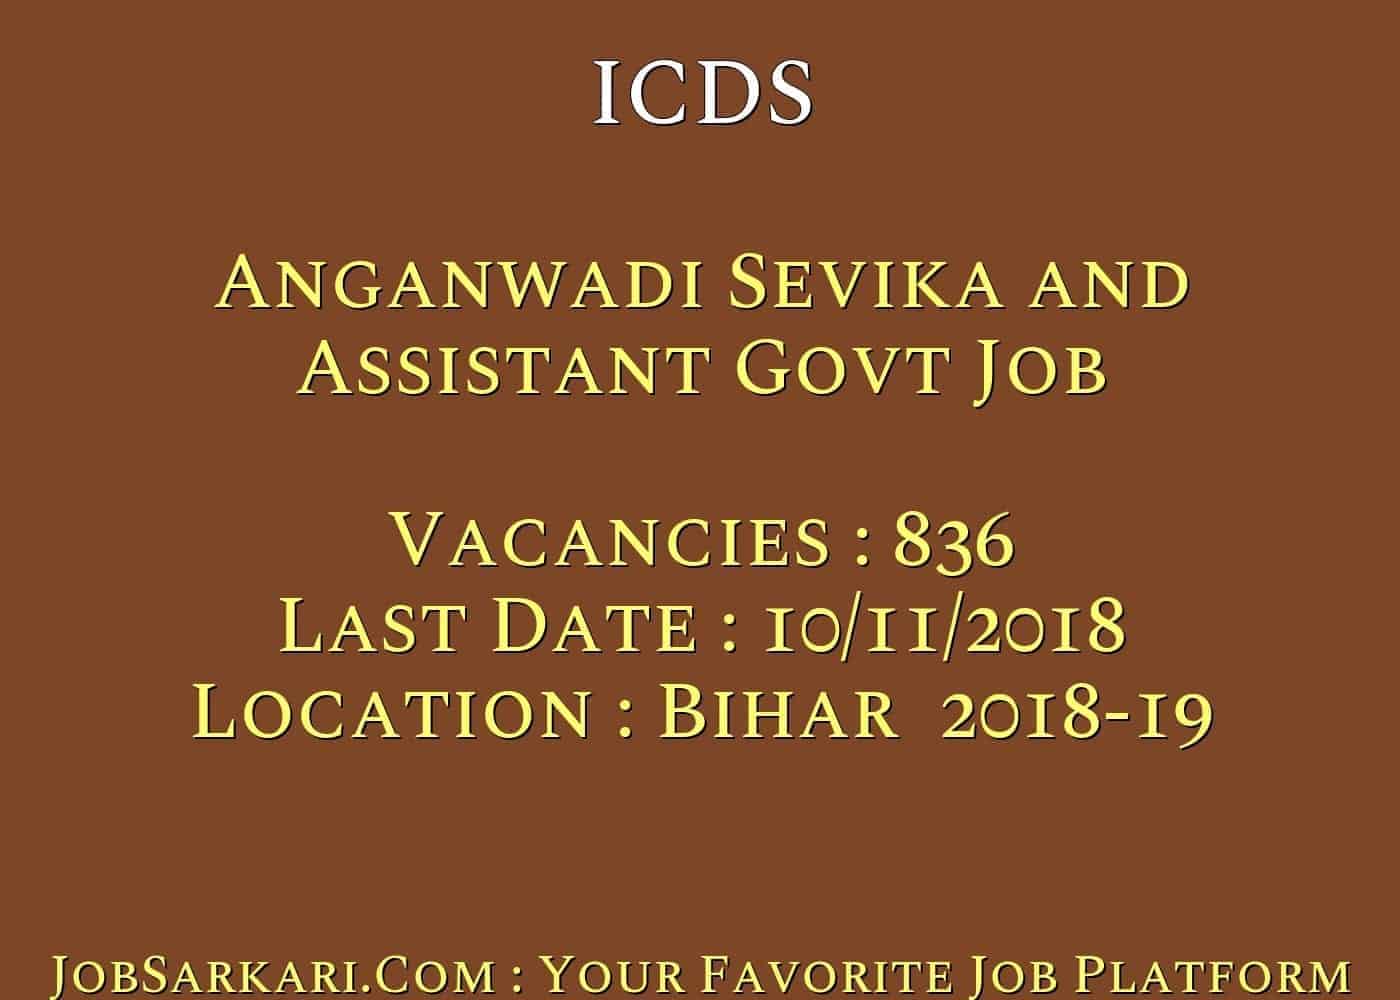 ICDS Recruitment 2018 for Anganwadi Sevika and Assistant Govt Job